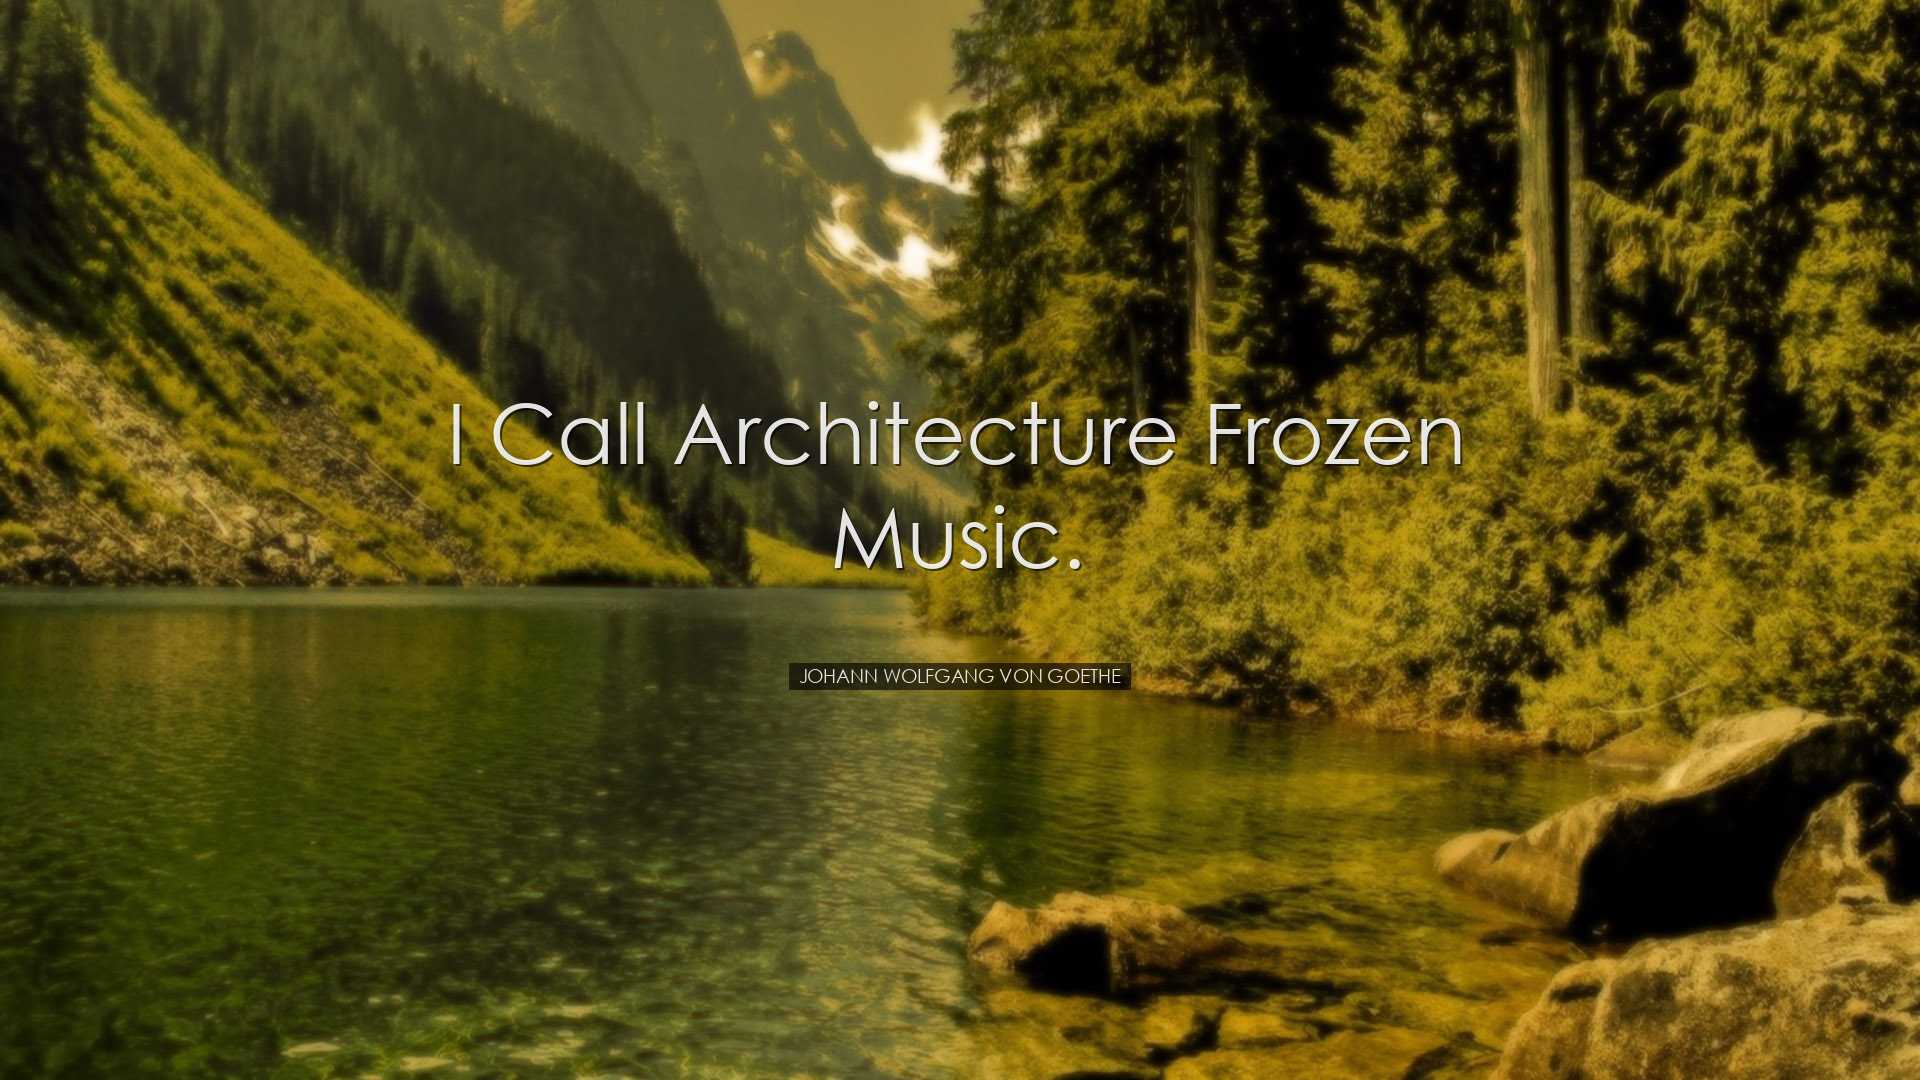 I call architecture frozen music. - Johann Wolfgang von Goethe